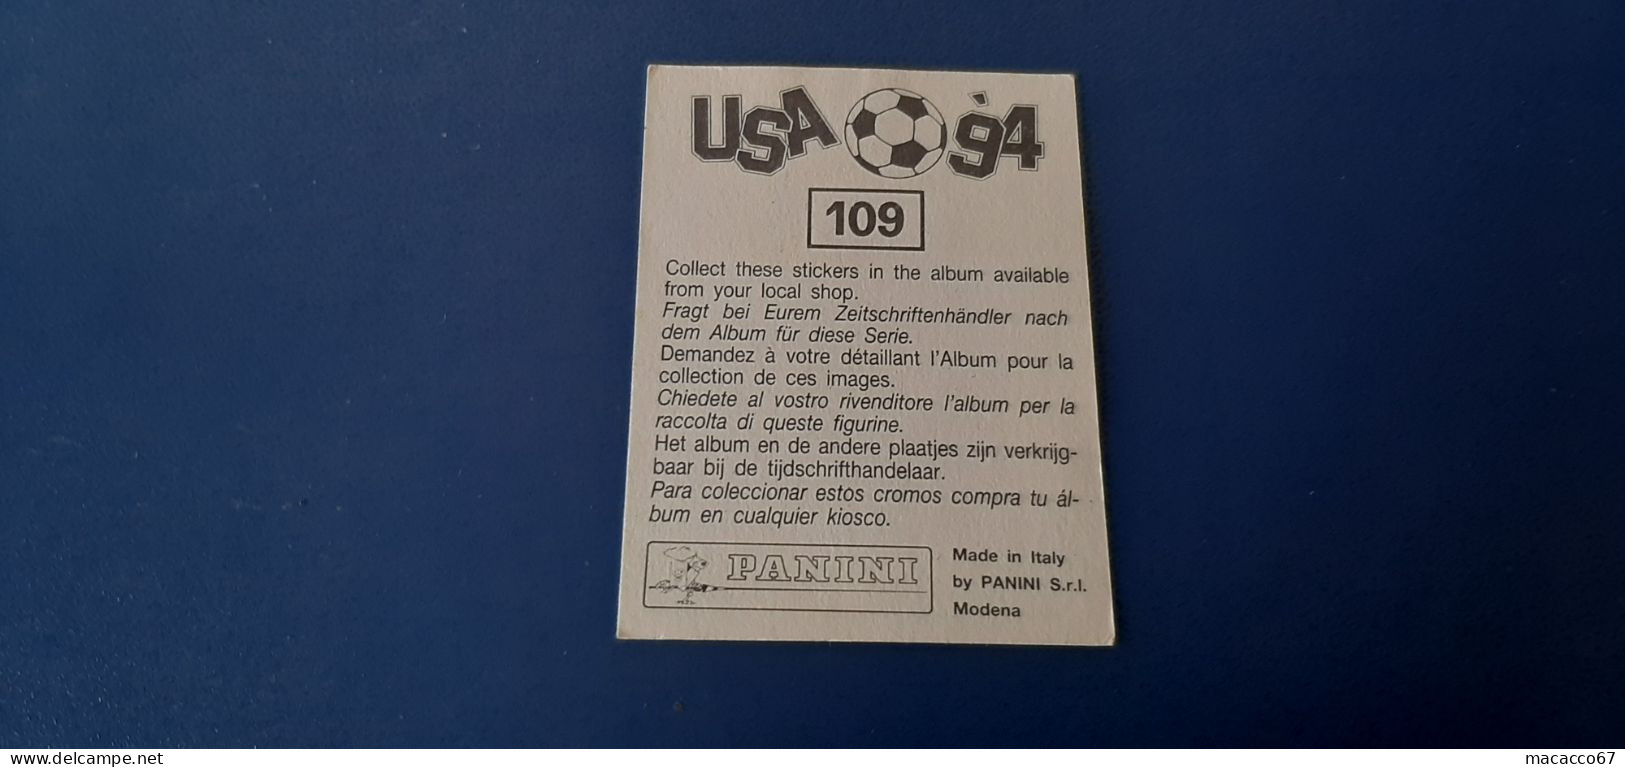 Figurina Panini WM USA 94 - 109 Evair Brasile - Italian Edition